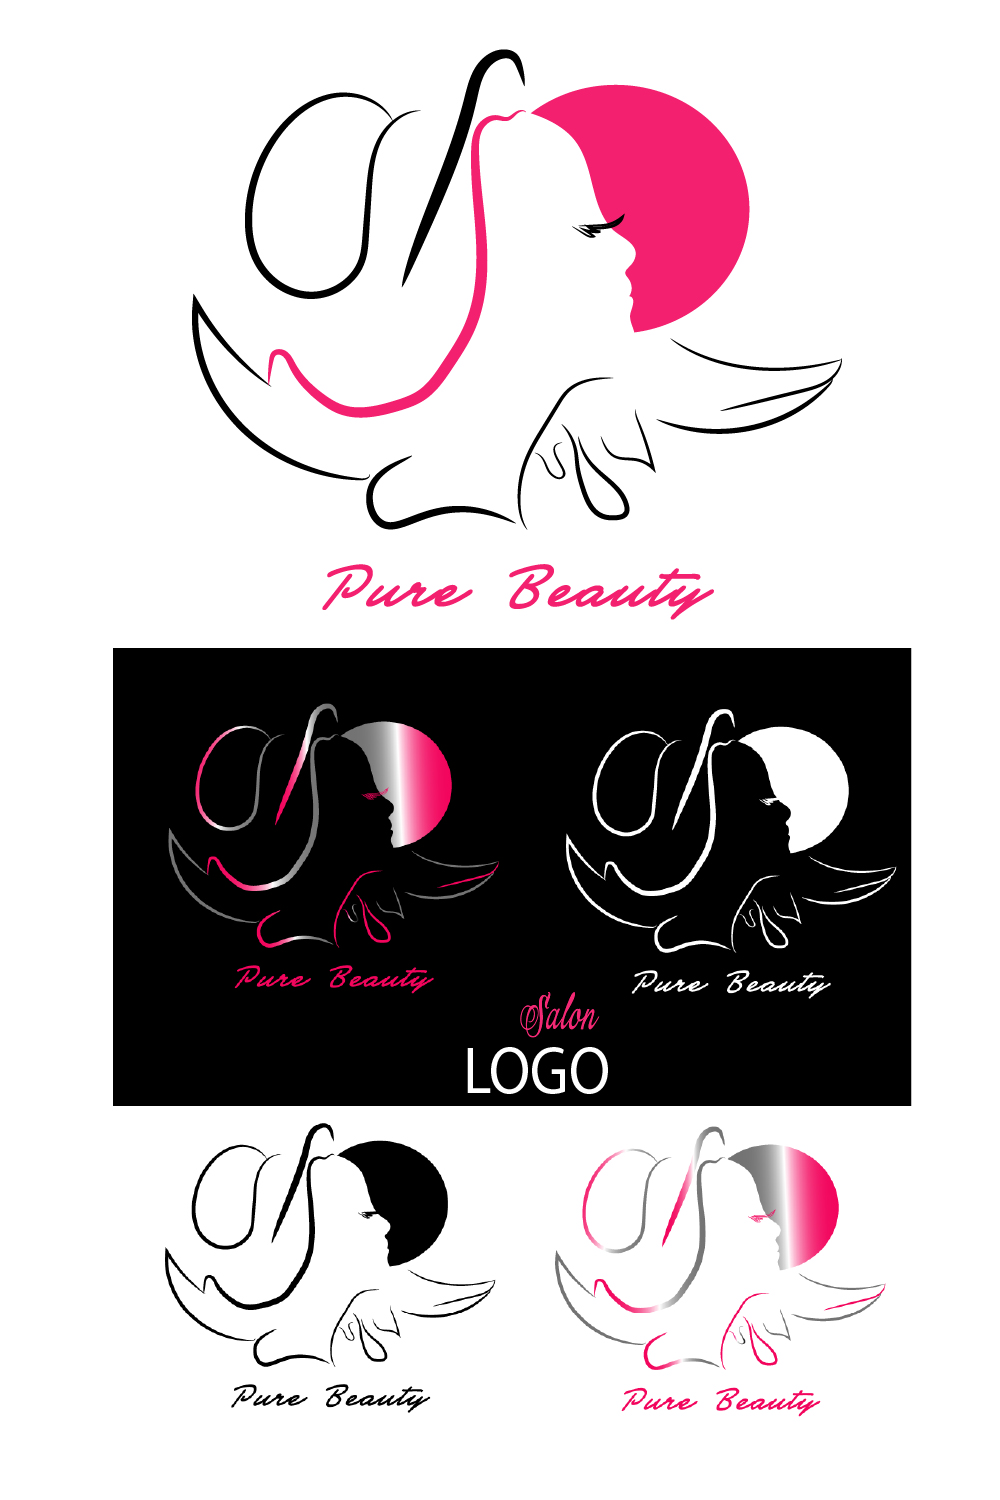 Pure Beauty Logo pinterest preview image.